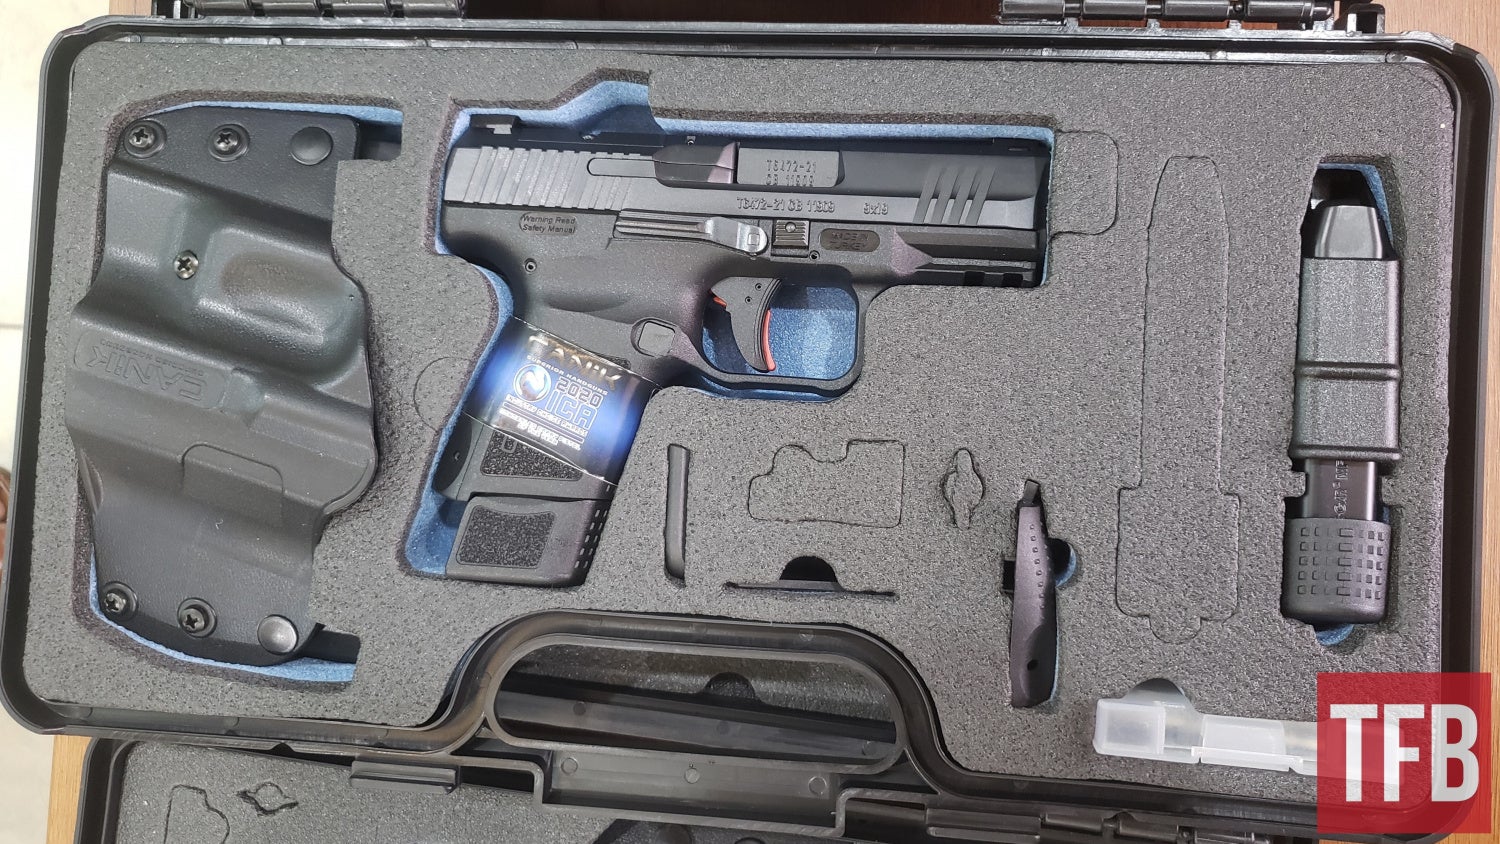 Turkish Canik pistol in one of the gun shops in Peshawar